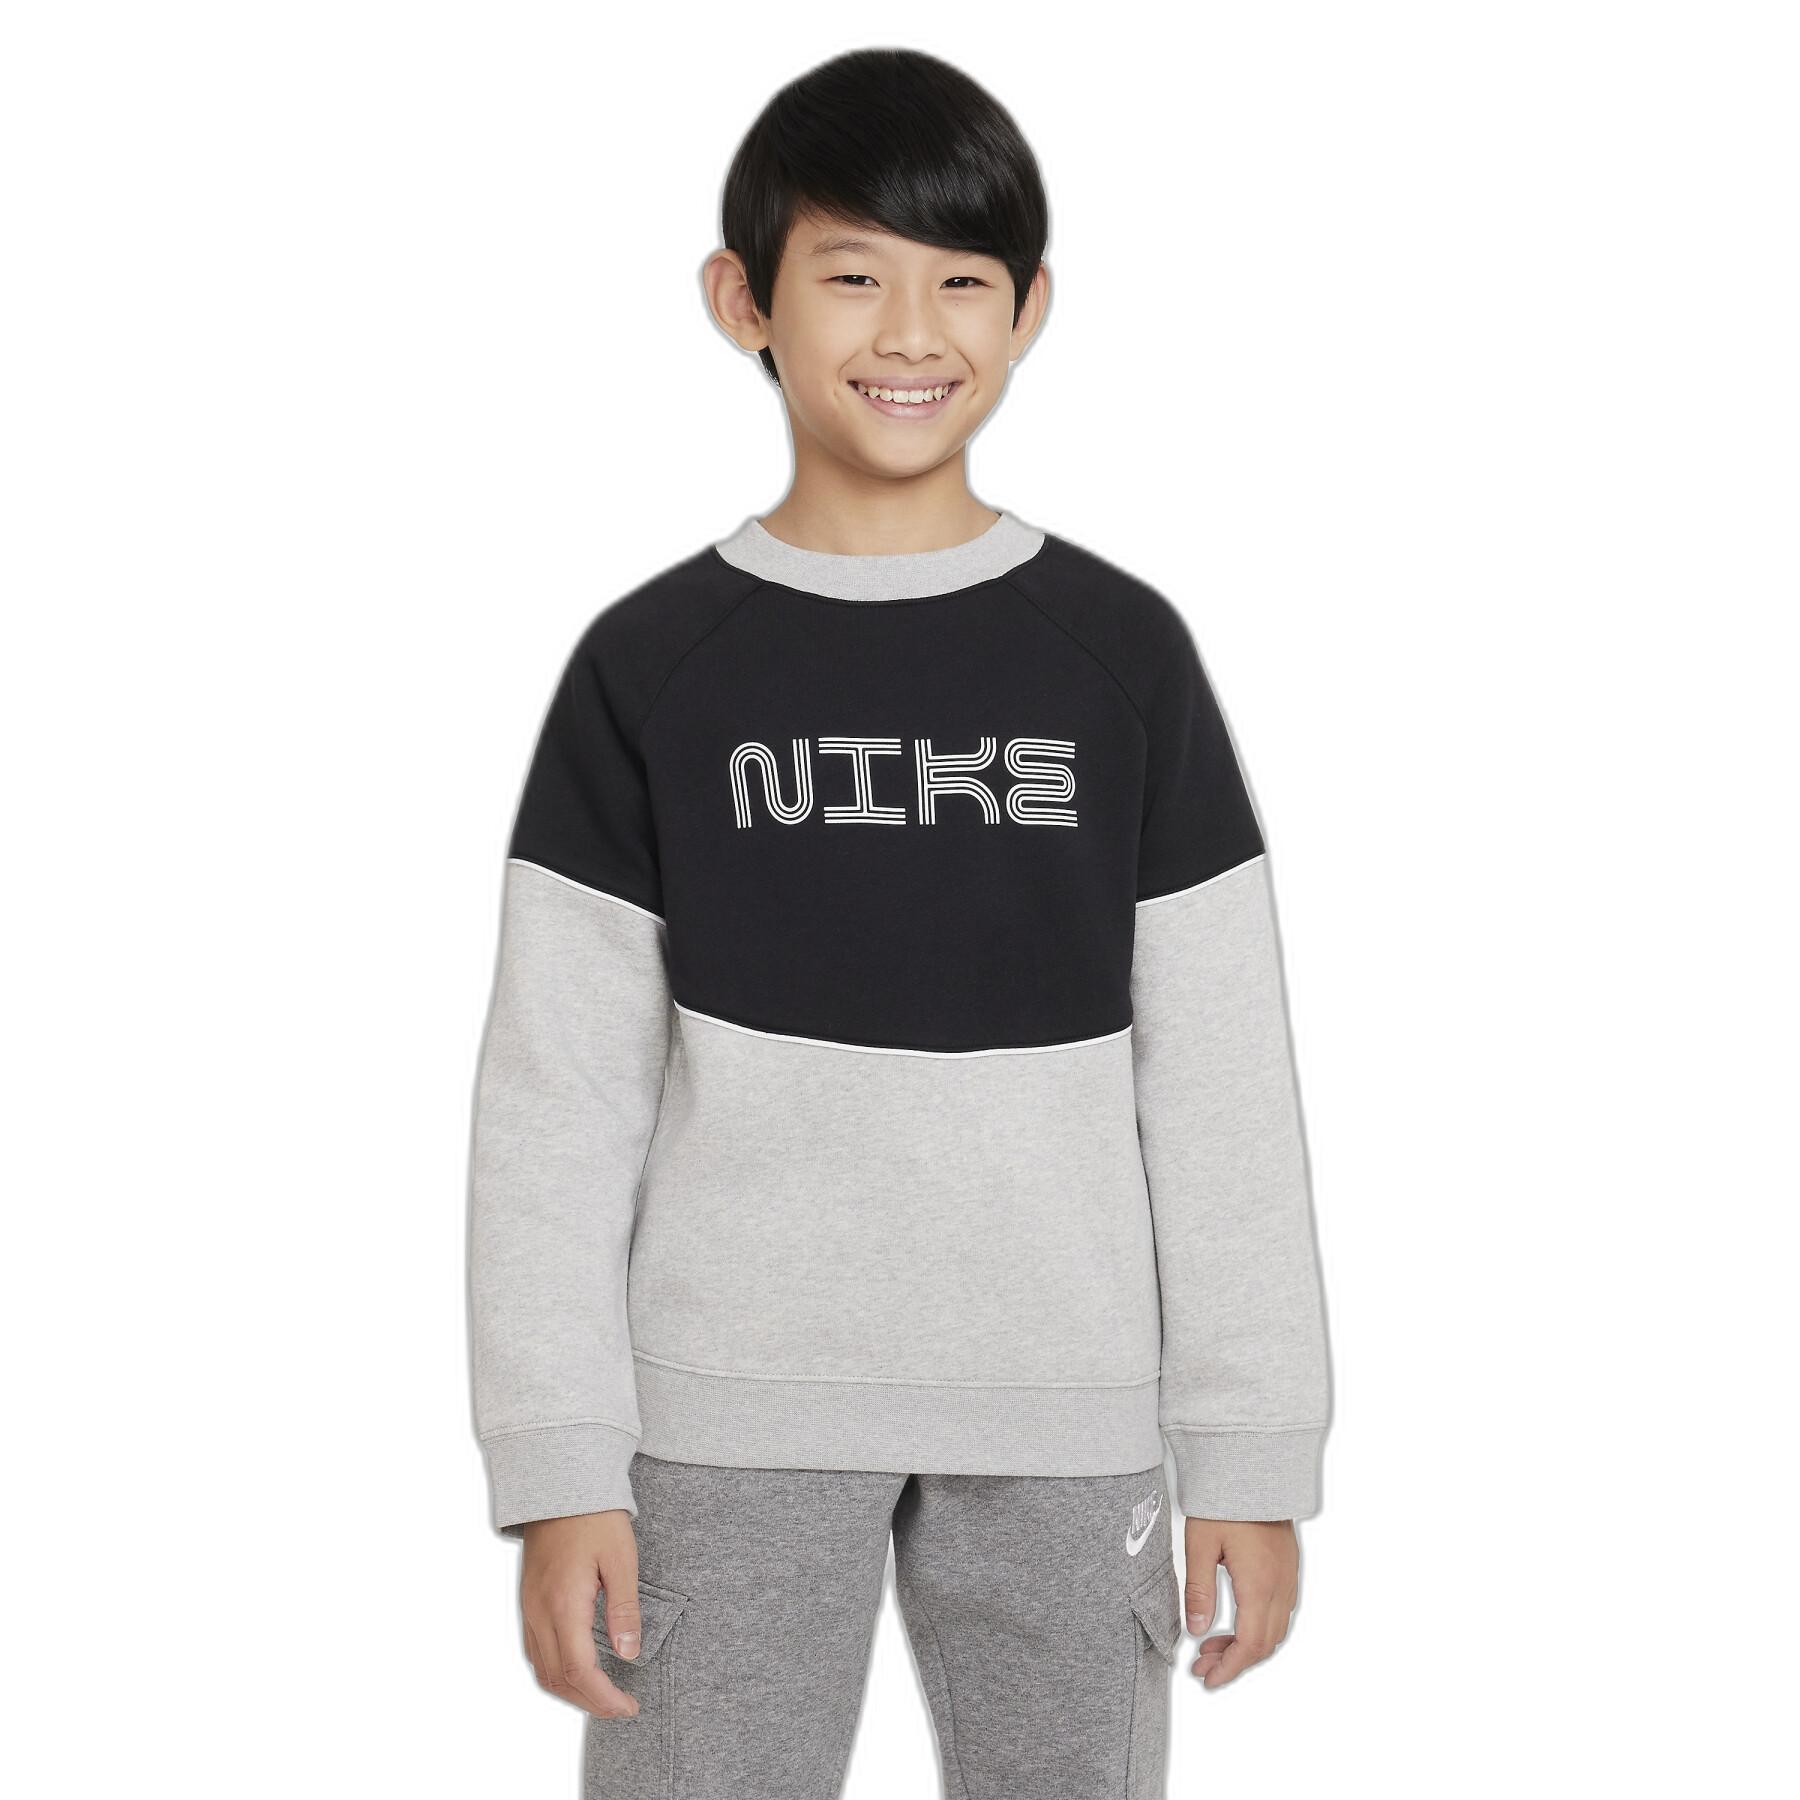 Sweatshirt niño cuello redondo Nike Amplify Fleece